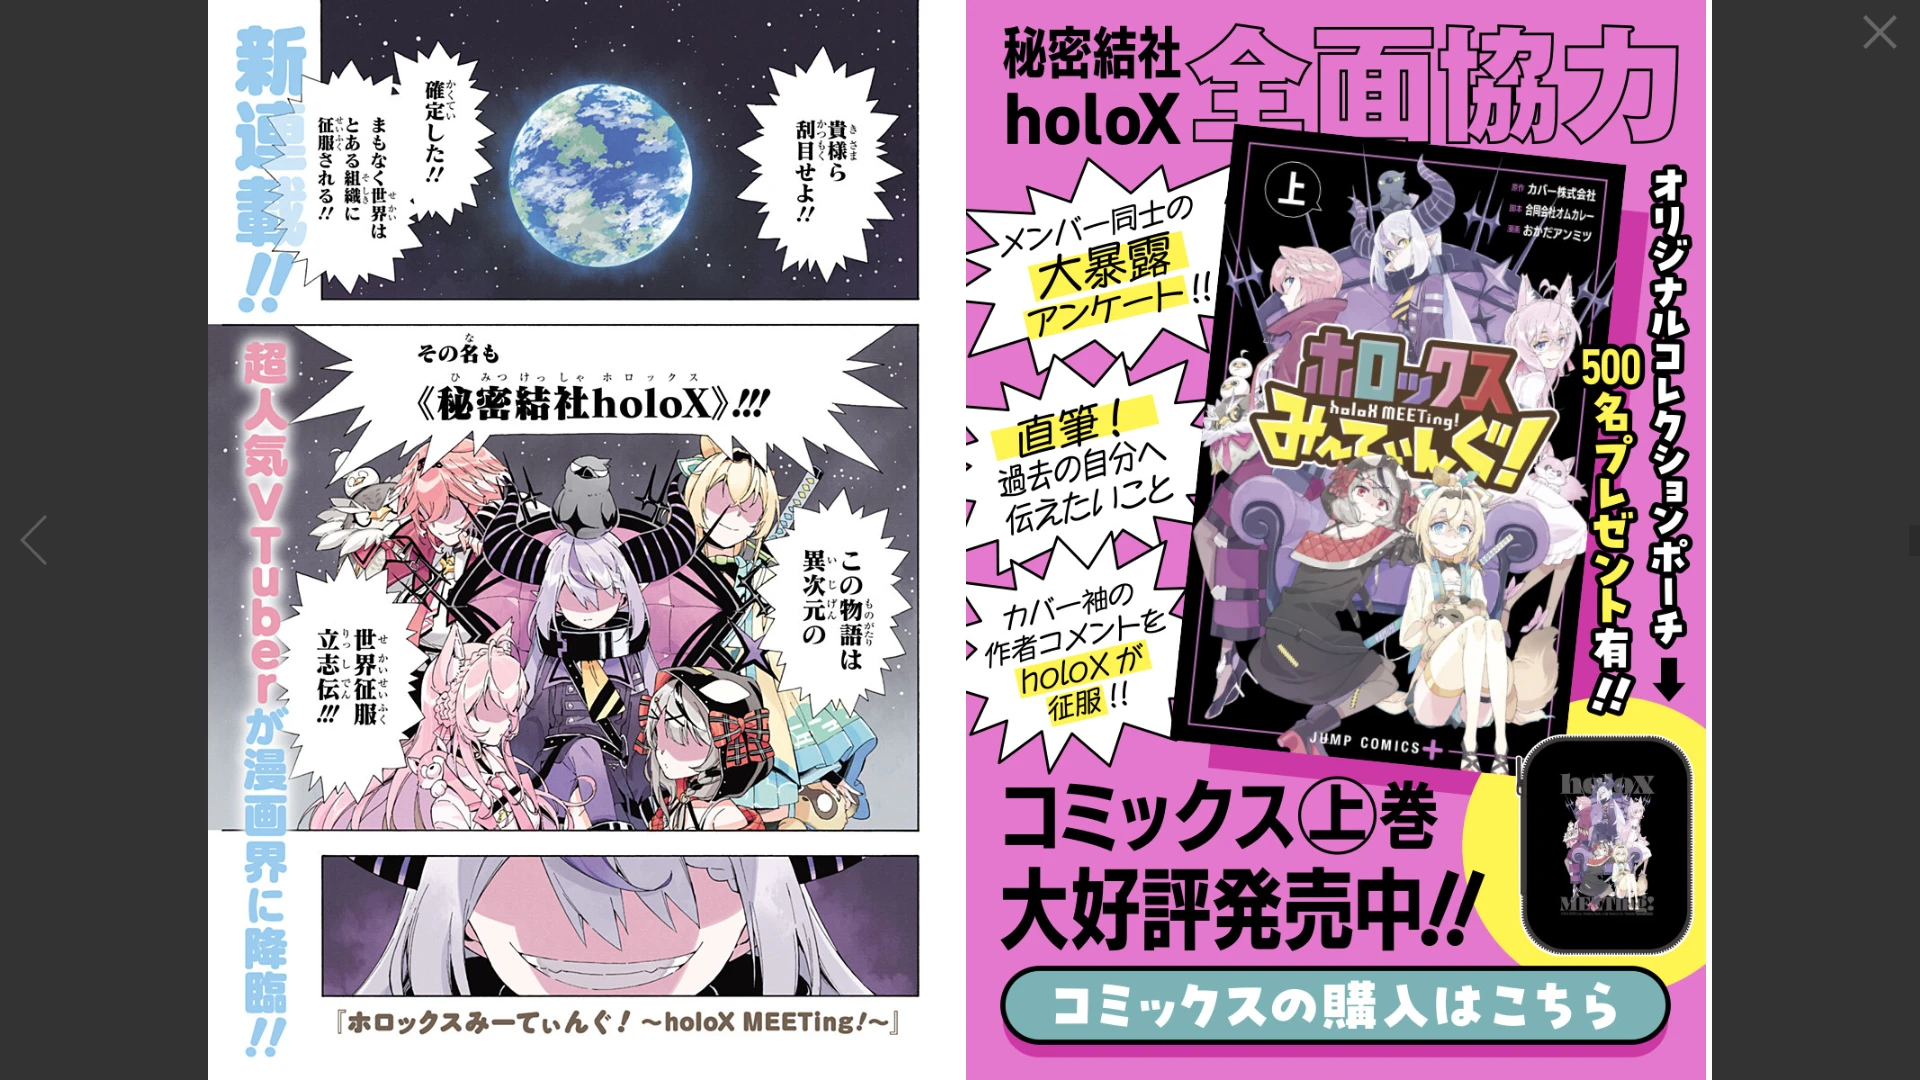 Holo资讯站178期 秘密结社holoX官方漫画 x 集英社JUMP单行本上卷4.4正式发售